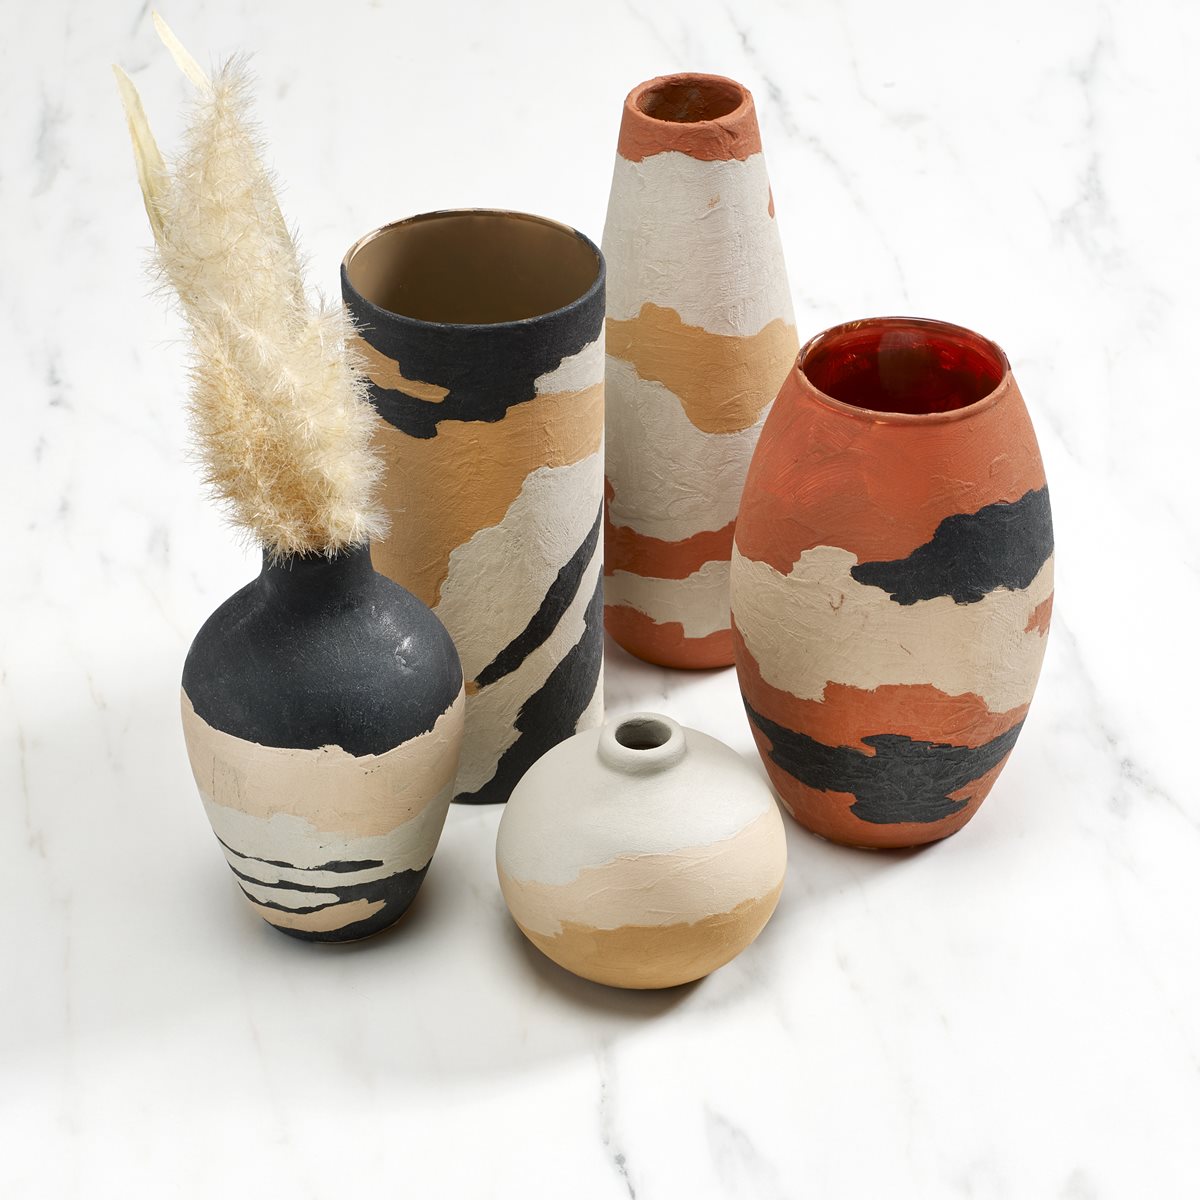 FolkArt Terra Cotta Abstract Pattern Vases